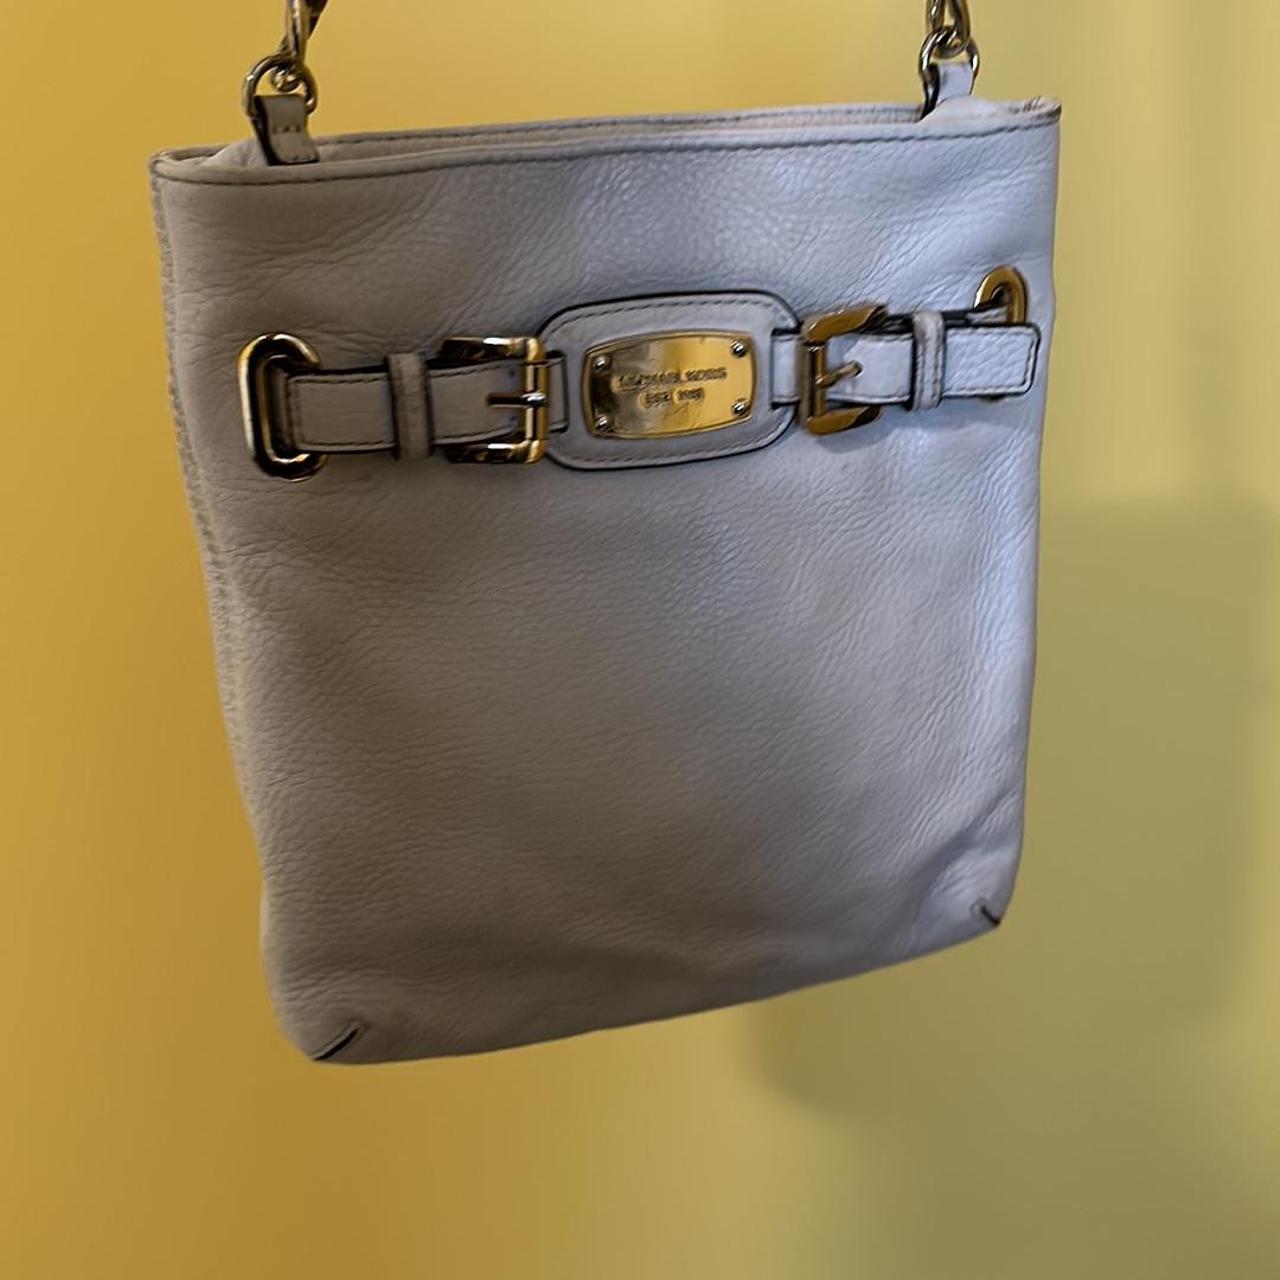 MICHAEL KORS: crossbody bags for woman - Yellow Cream